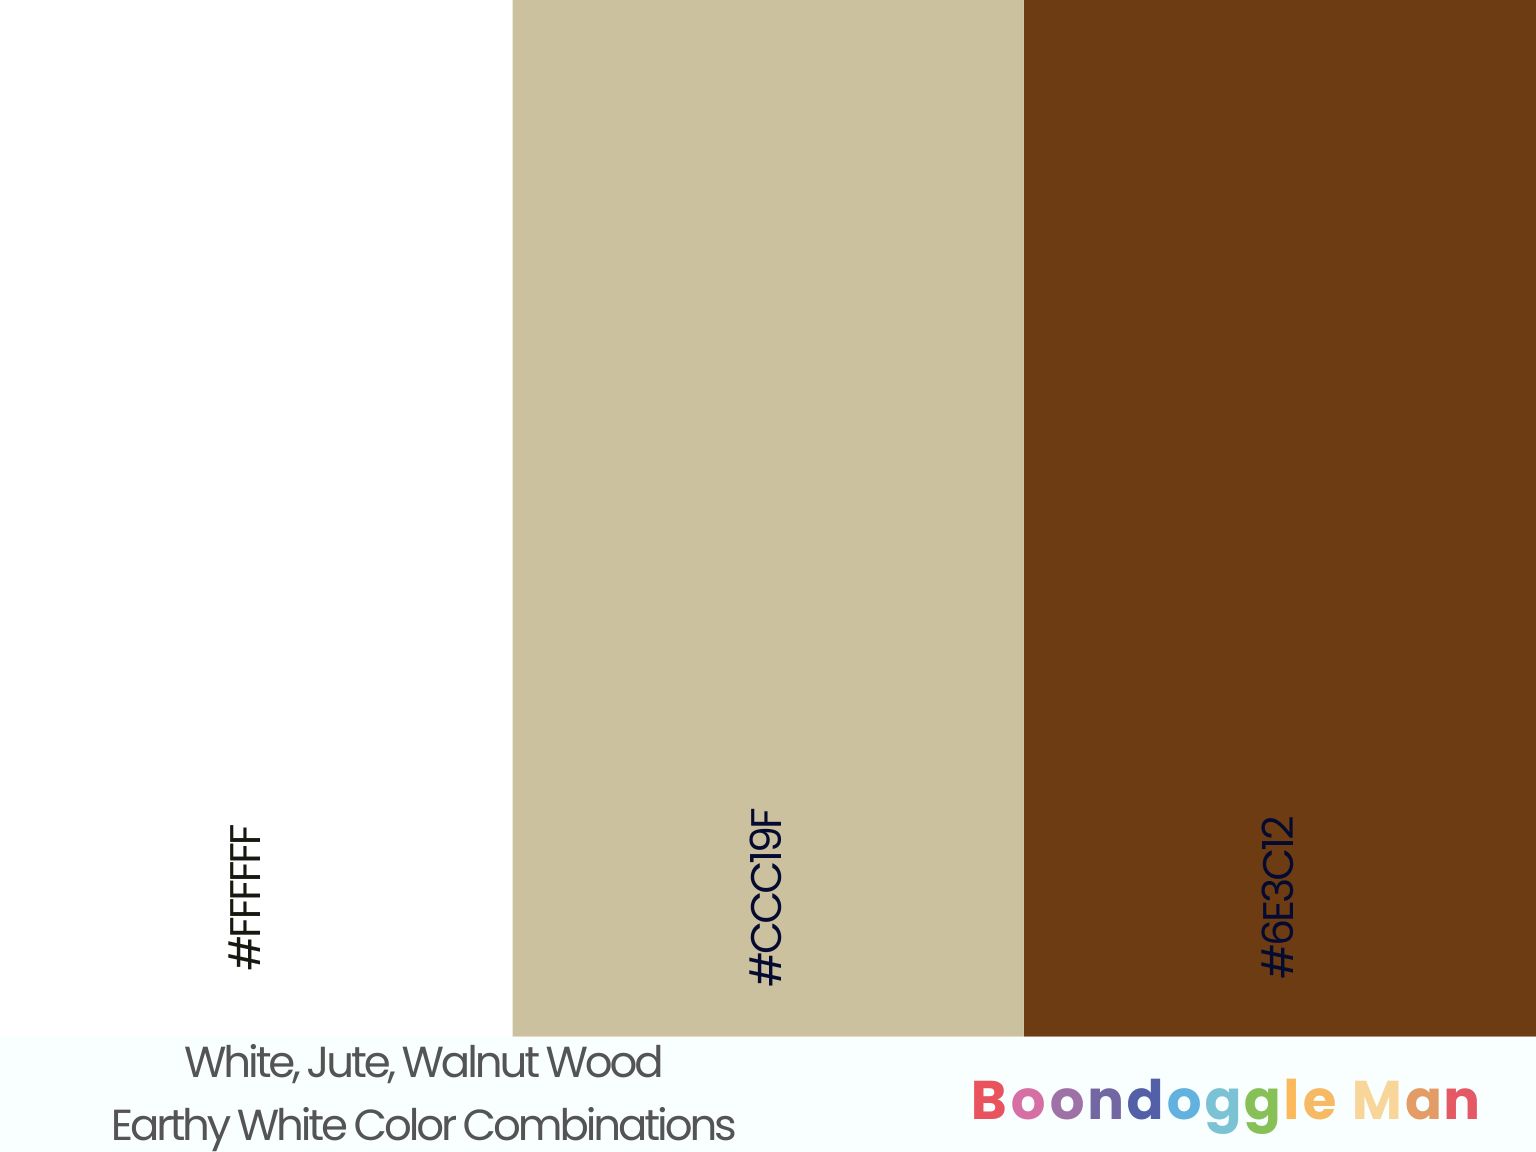 White, Jute, Walnut Wood